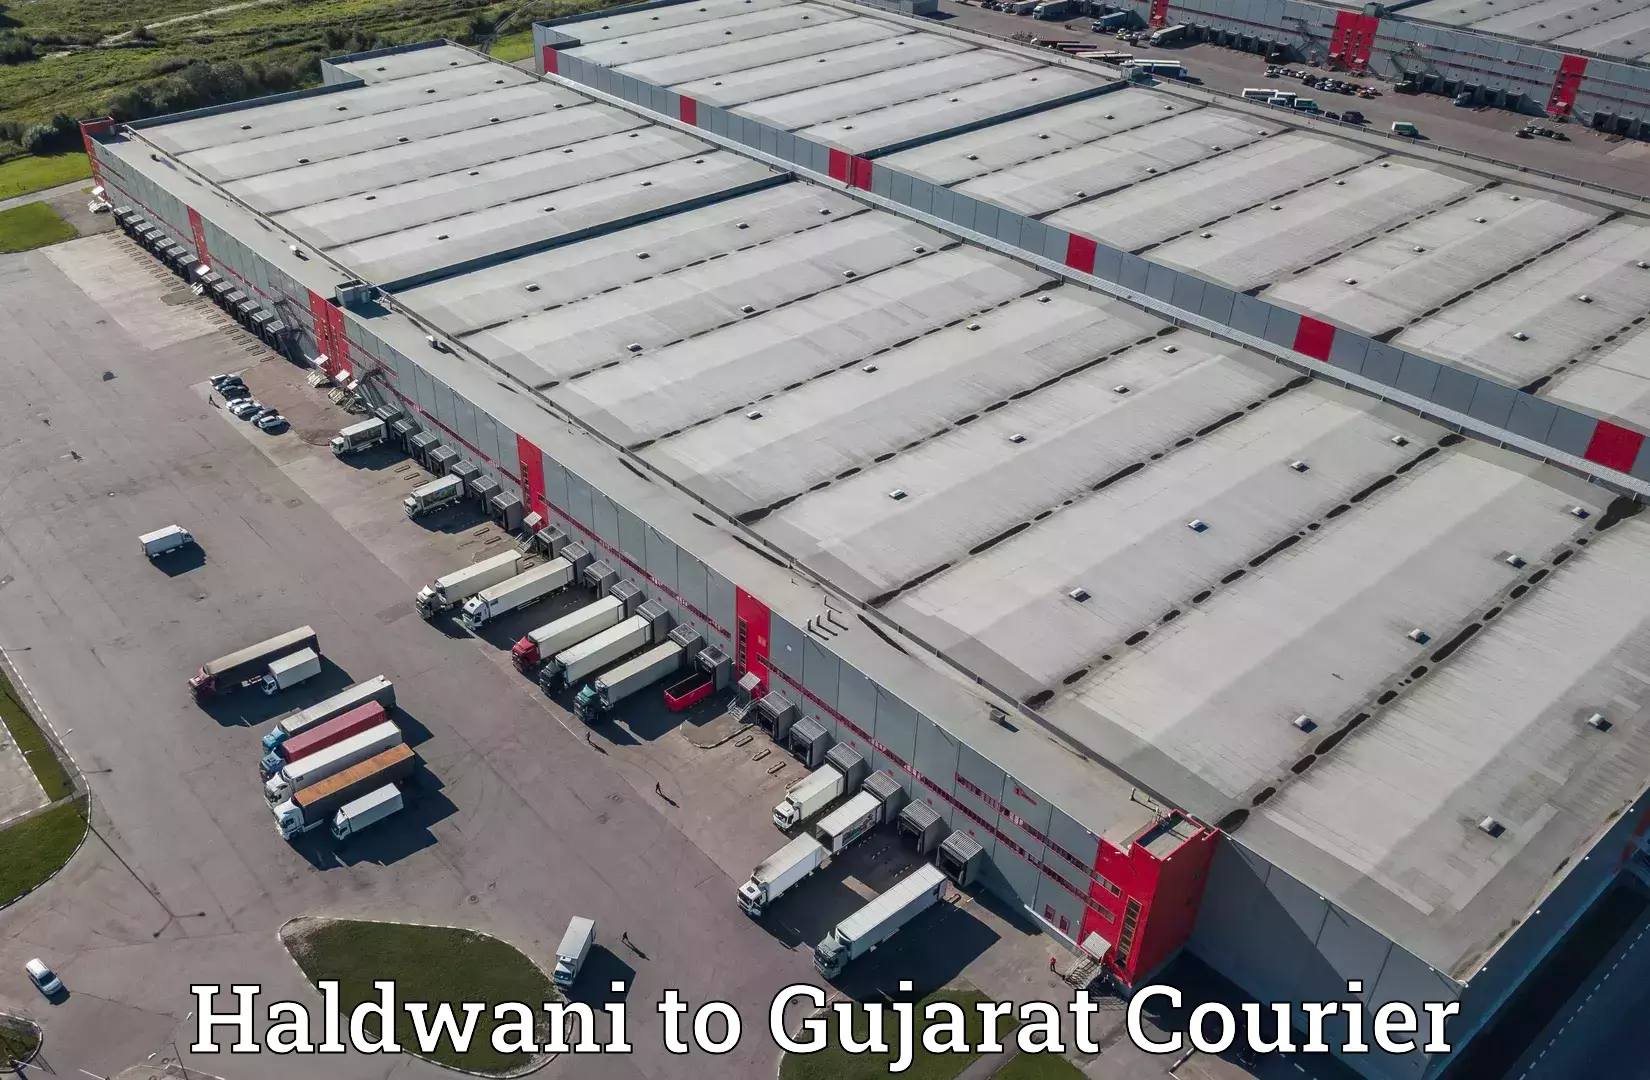 Professional courier handling Haldwani to Gujarat